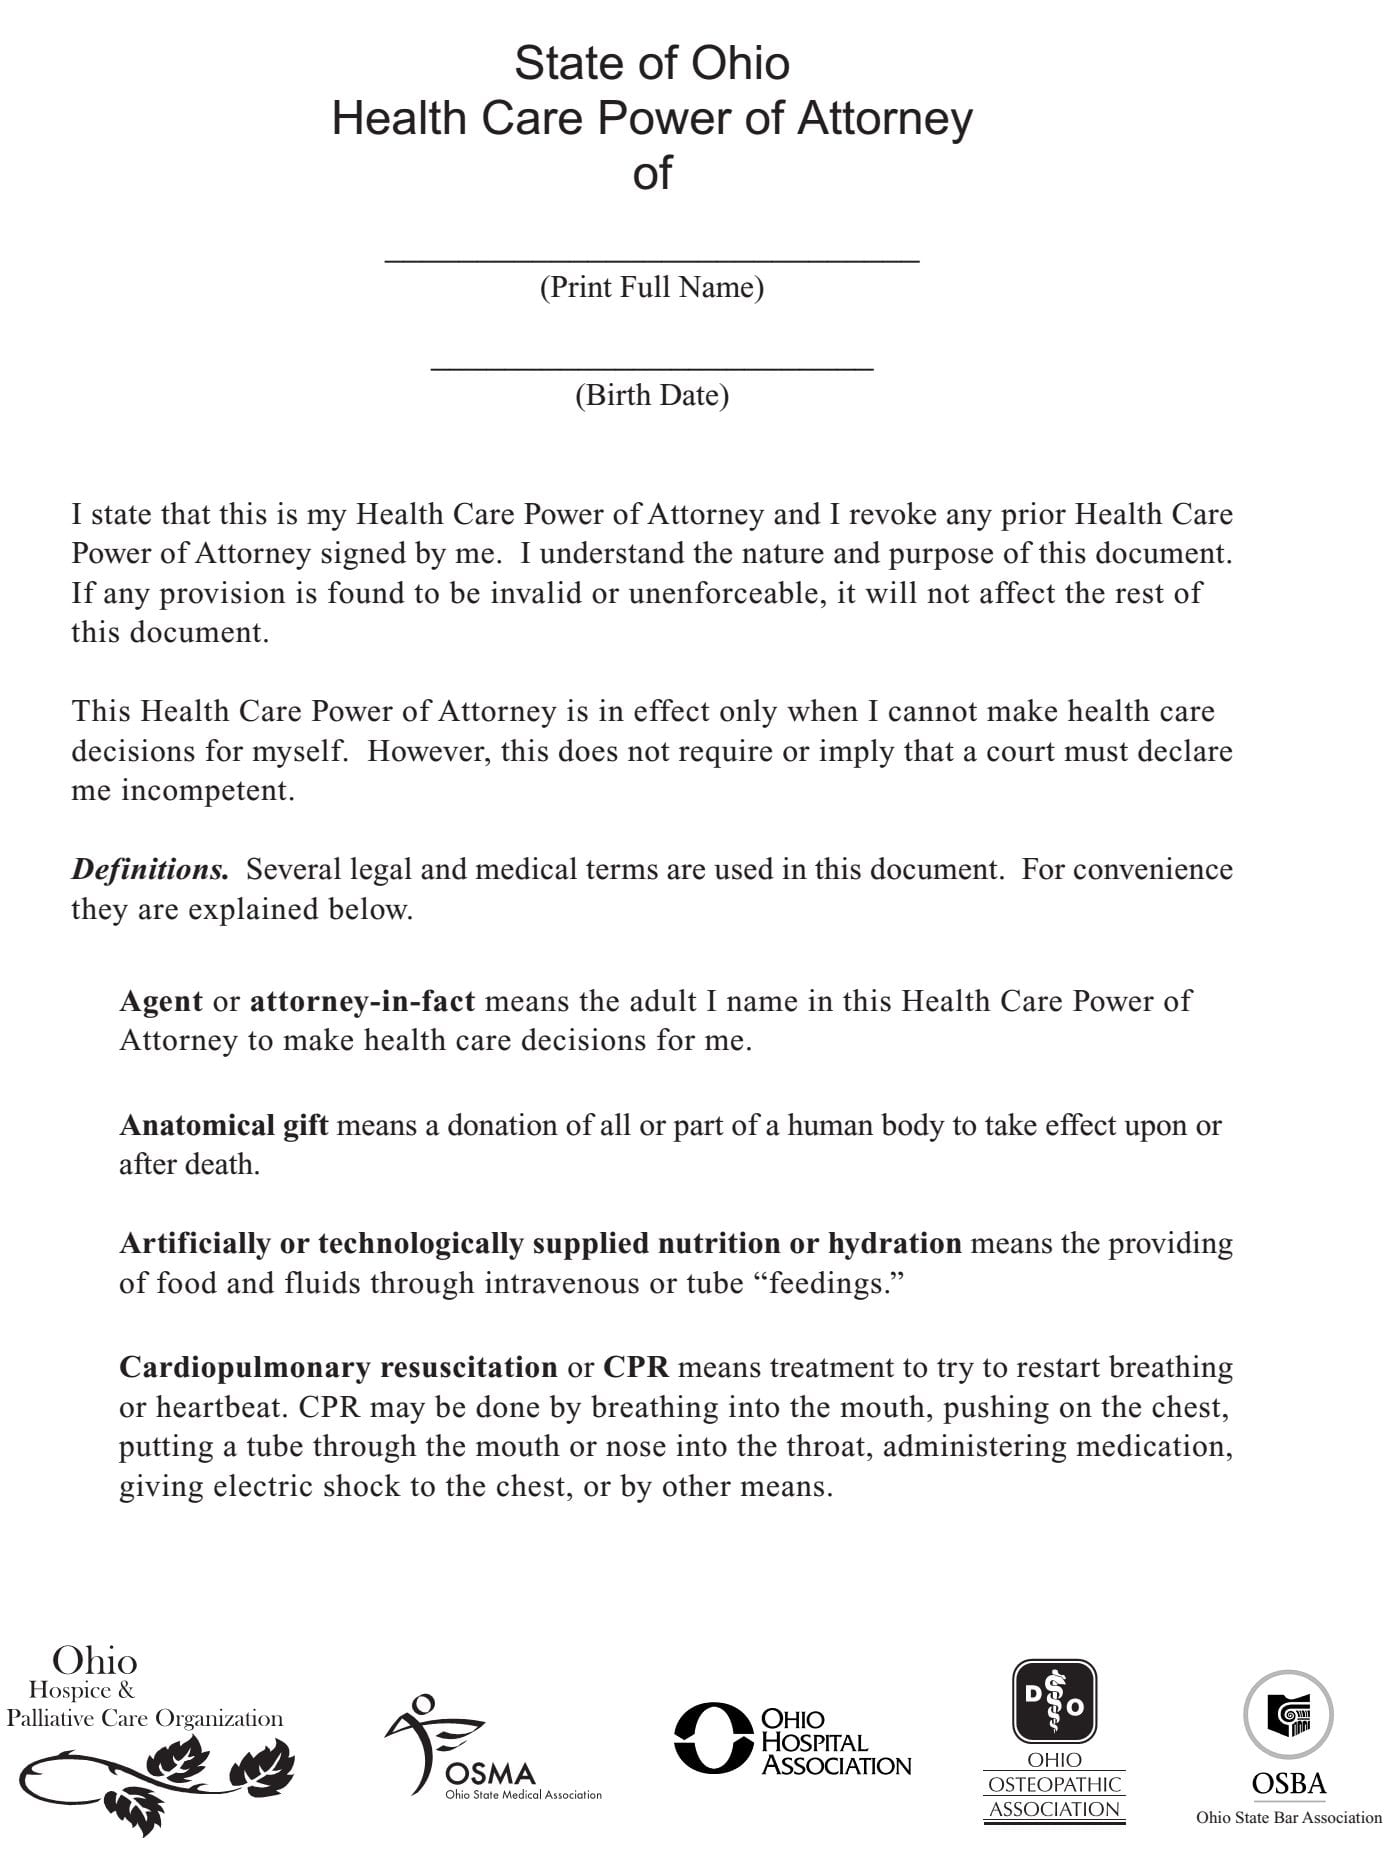 Ohio Health Care Power of Attorney Form